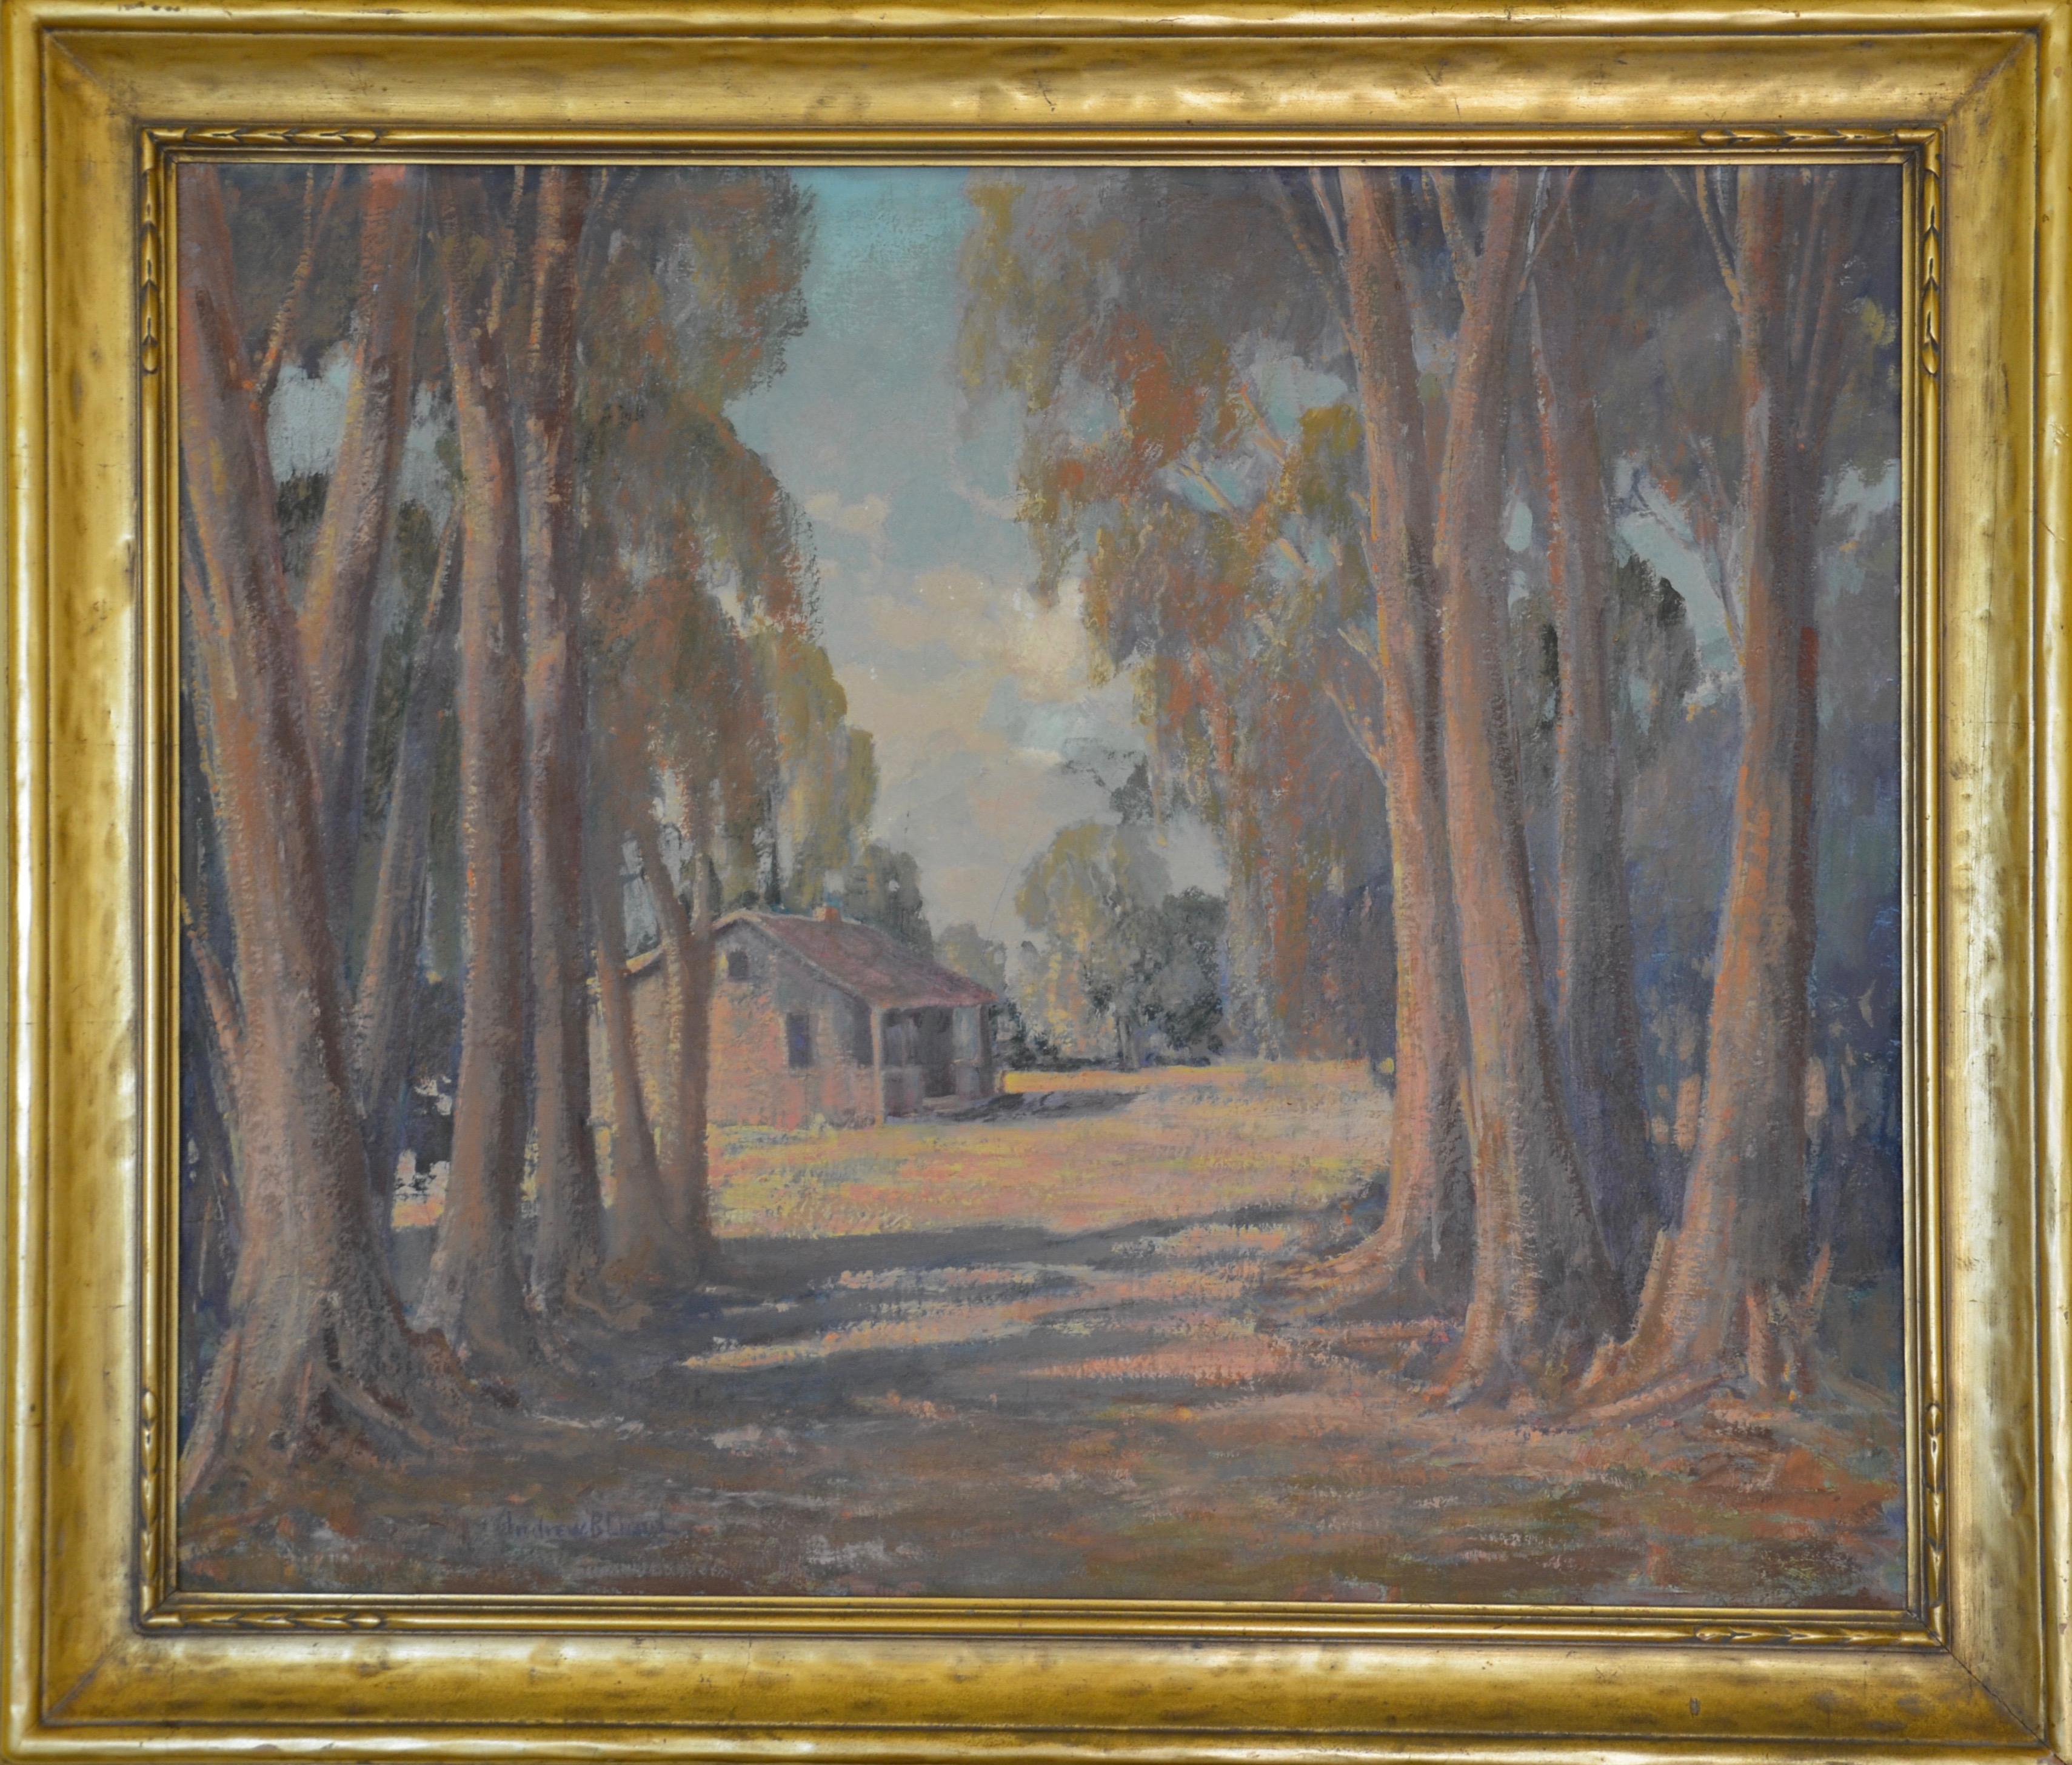 Andrew Lund Landscape Painting - Cabin amongst Eucalyptus Trees, Rancho Santa Fe, San Diego California 1930s o/c